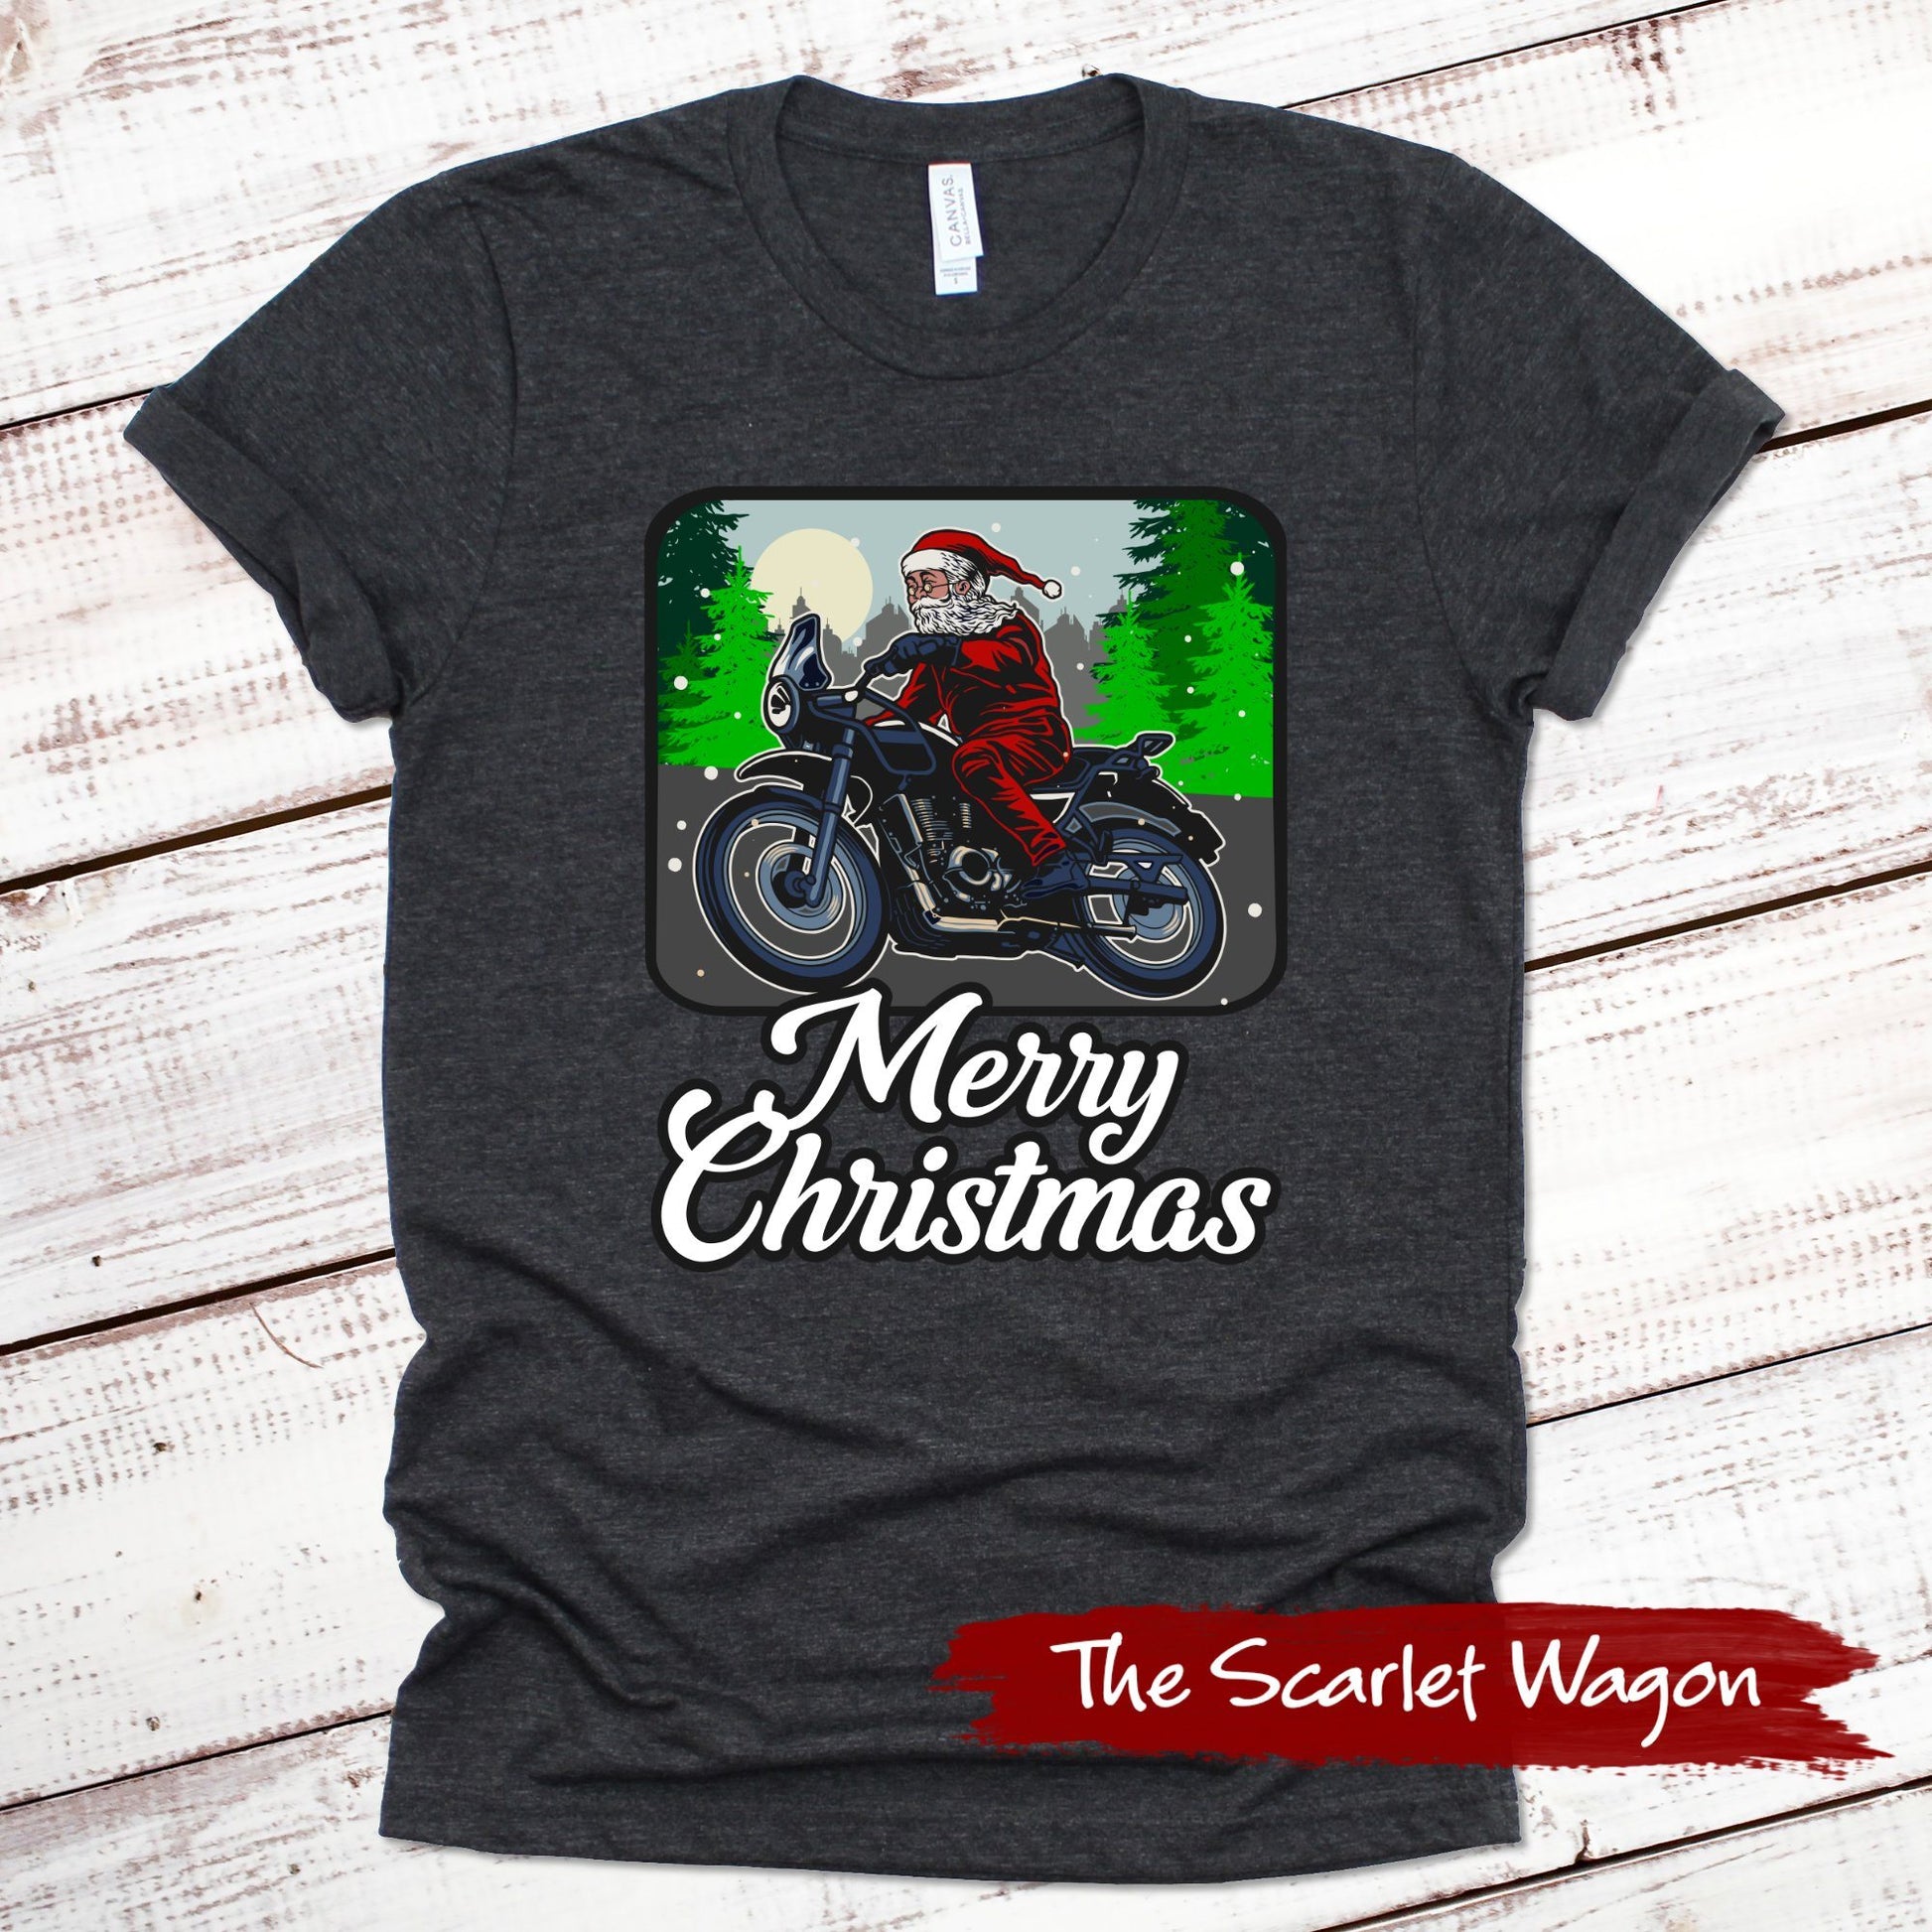 Motorcycle Santa Christmas Shirt Scarlet Wagon Dark Gray Heather XS 